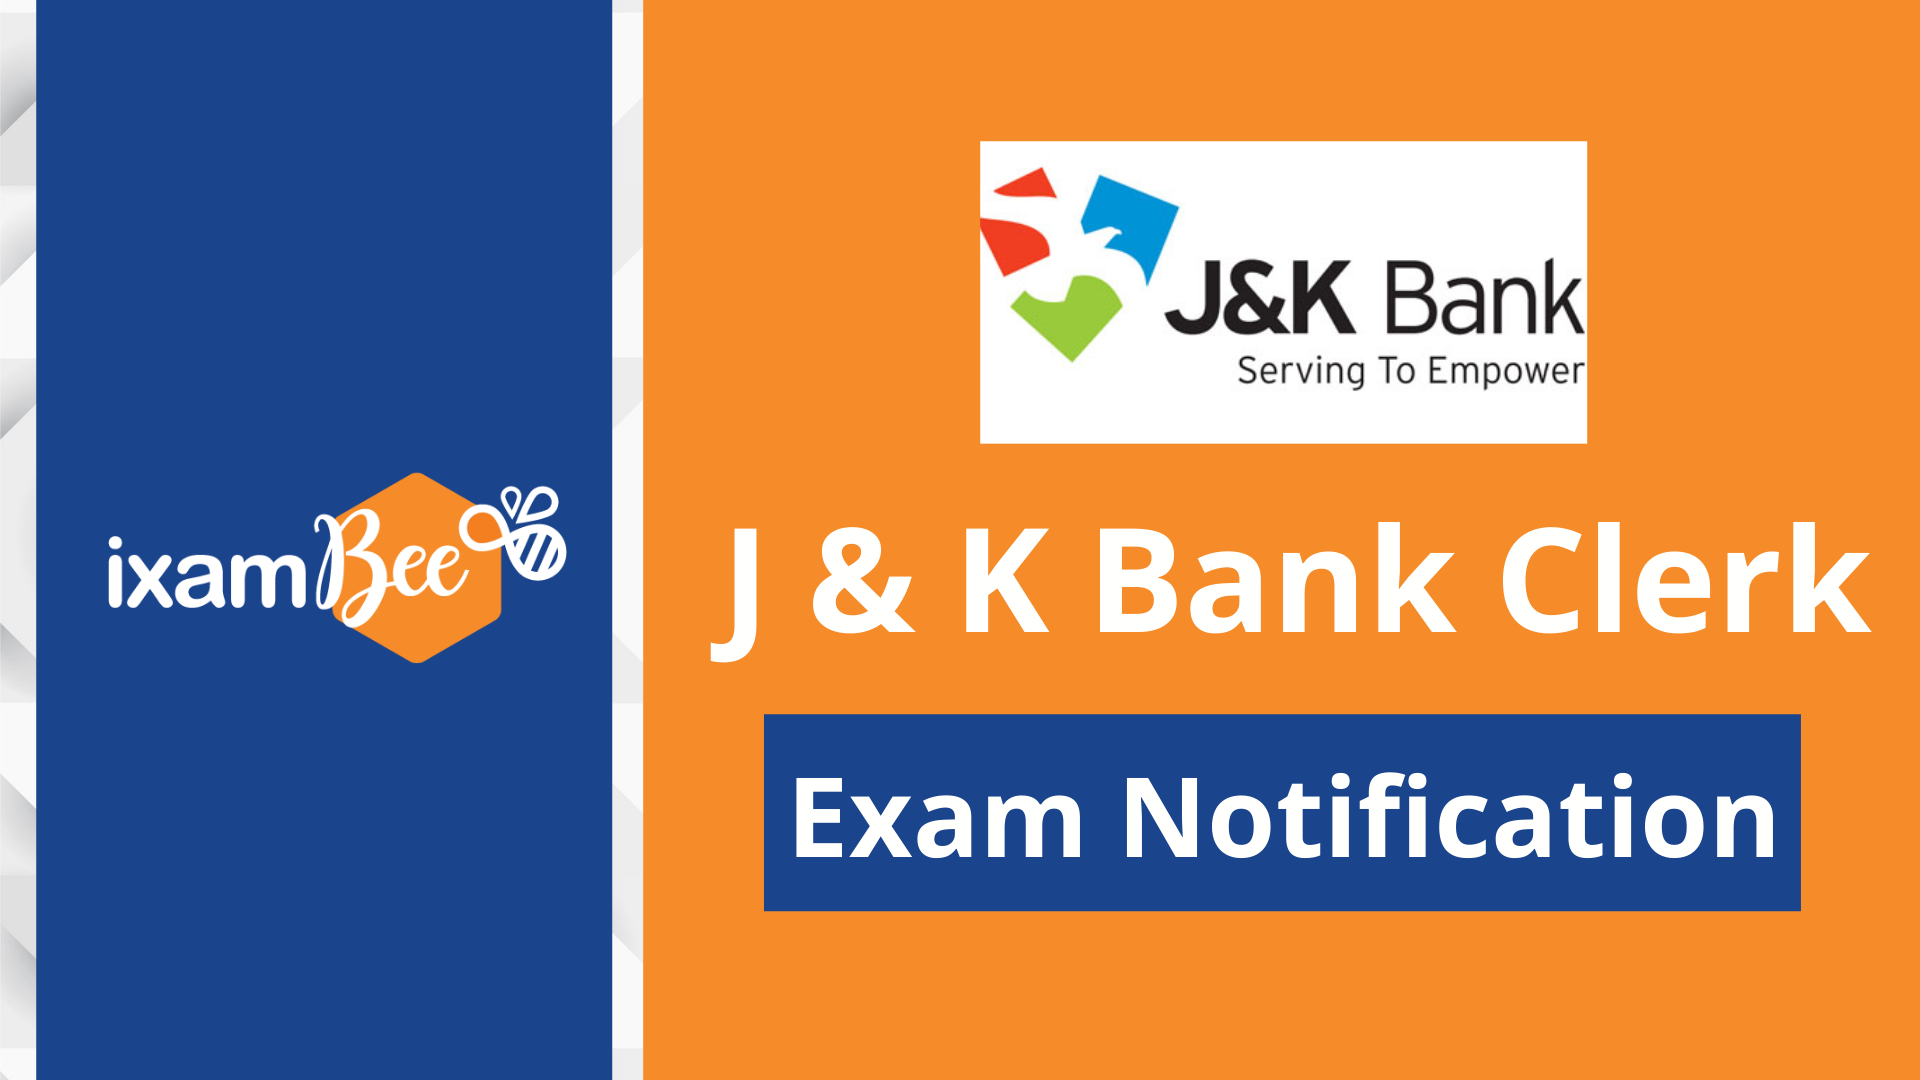 J&K Bank Clerk Exam Notification